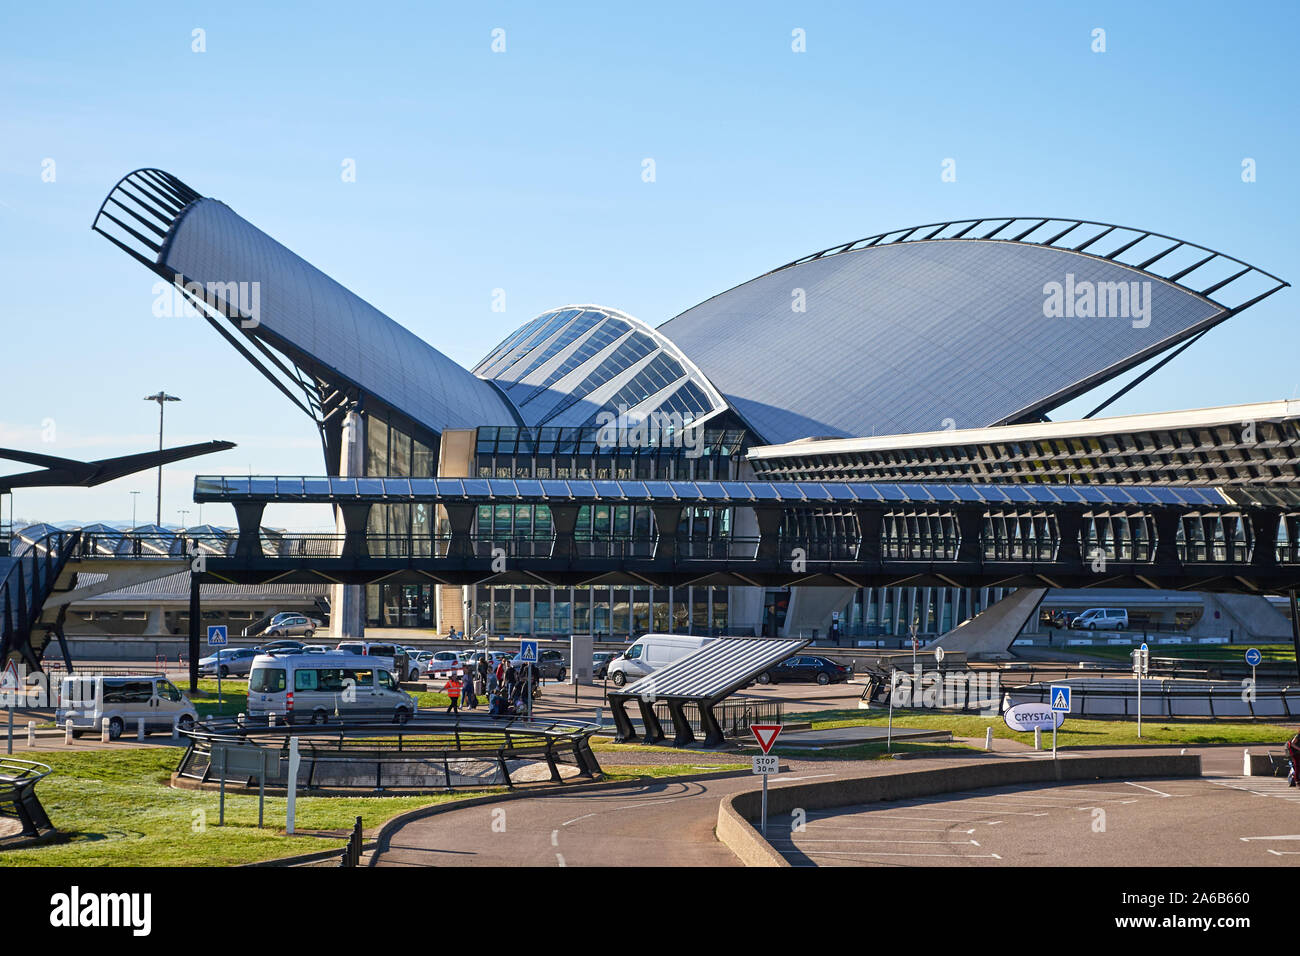 Lyon, France - March 16, 2019: Back view of TGV station main building at Lyon Saint-Exupery Airport, designed by architect Santiago Calatrava Valls. T Stock Photo